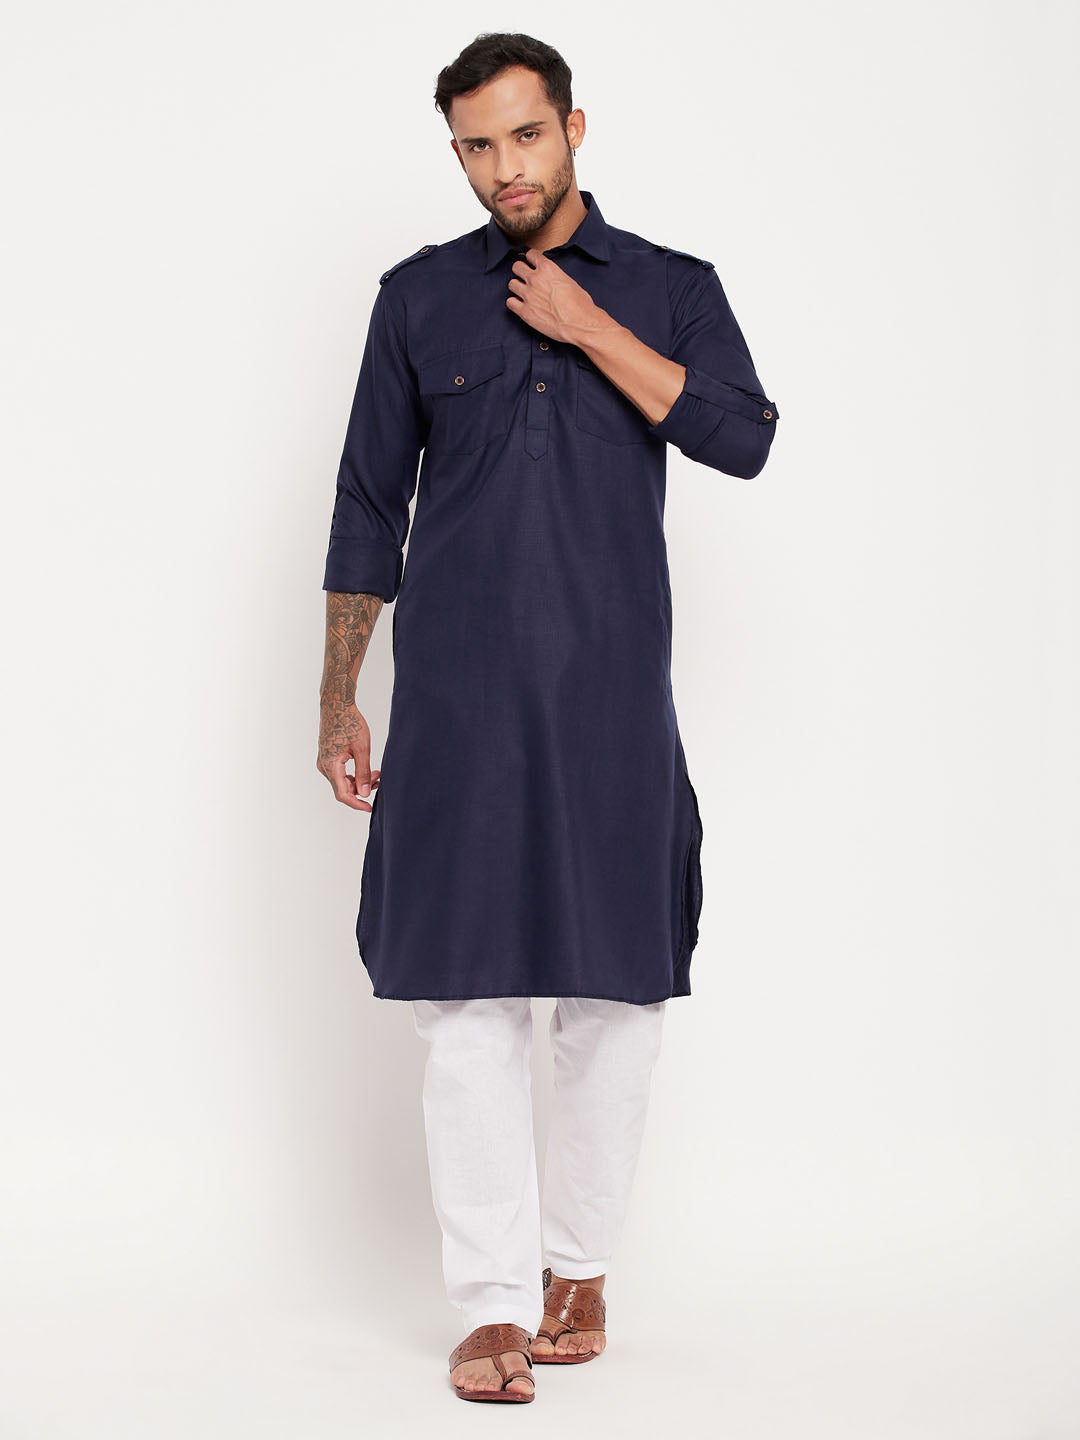 Buy POOLUV Pathani Suit For Men | Cotton Pathani Kurta Payjama With Full  sleeves Calf | Navratri, Dussehra, Diwali Special | Ethnic, Wedding,  Festival, Party Wear | Indo Western Latest Style. at Mehndi Haldi